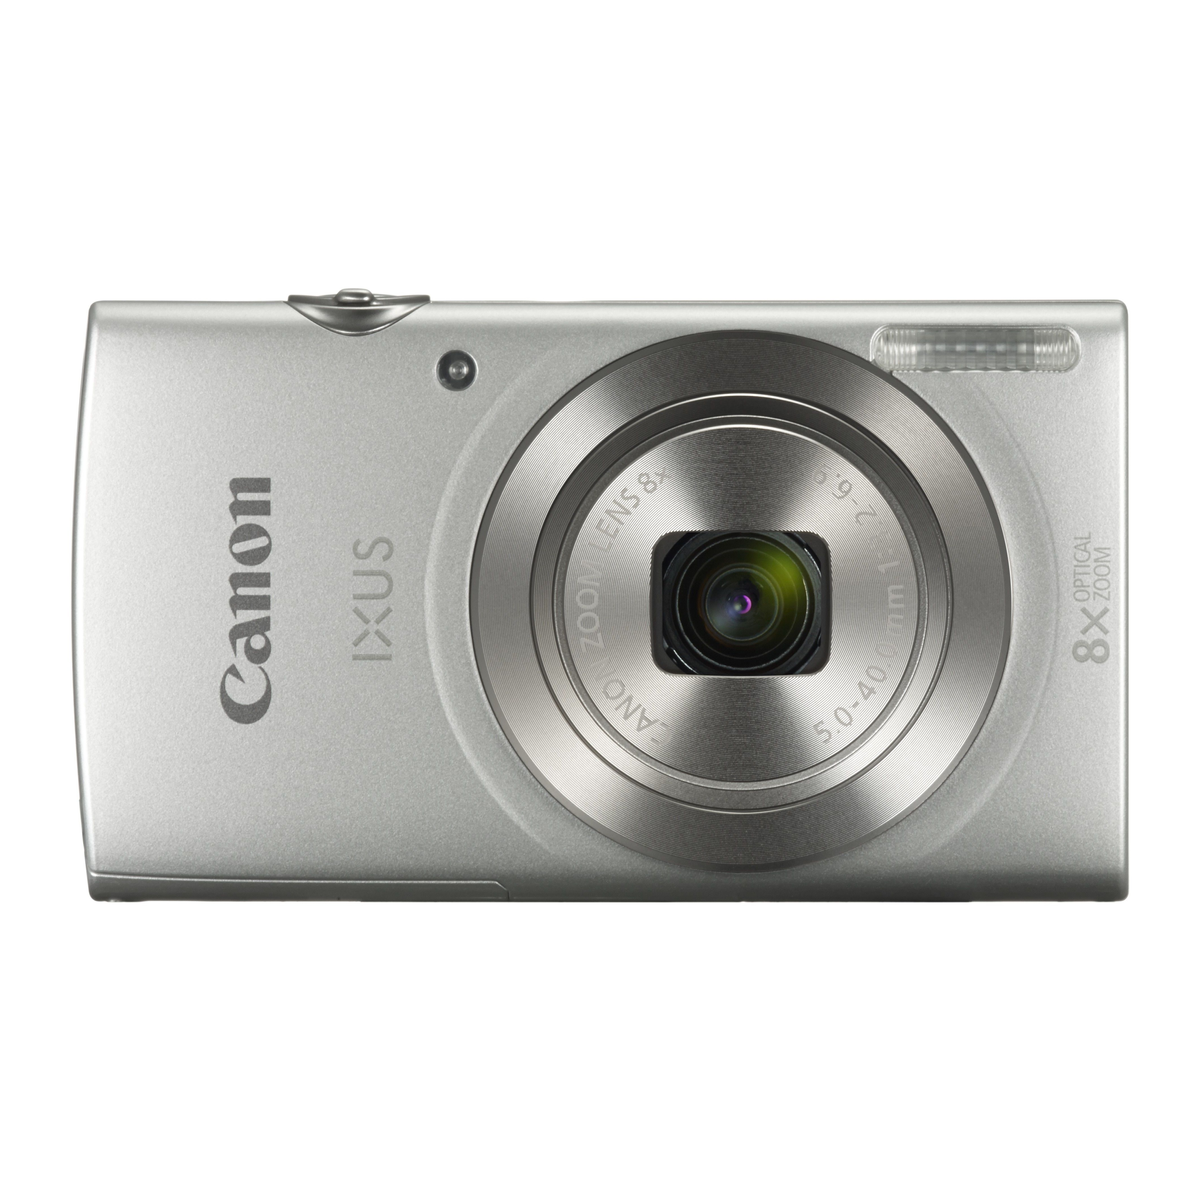 Canon PowerShot IXUS 185 / Elph 180 20.0MP 720p 2,7" LCD Digital Camera (Silver) - image 2 of 7